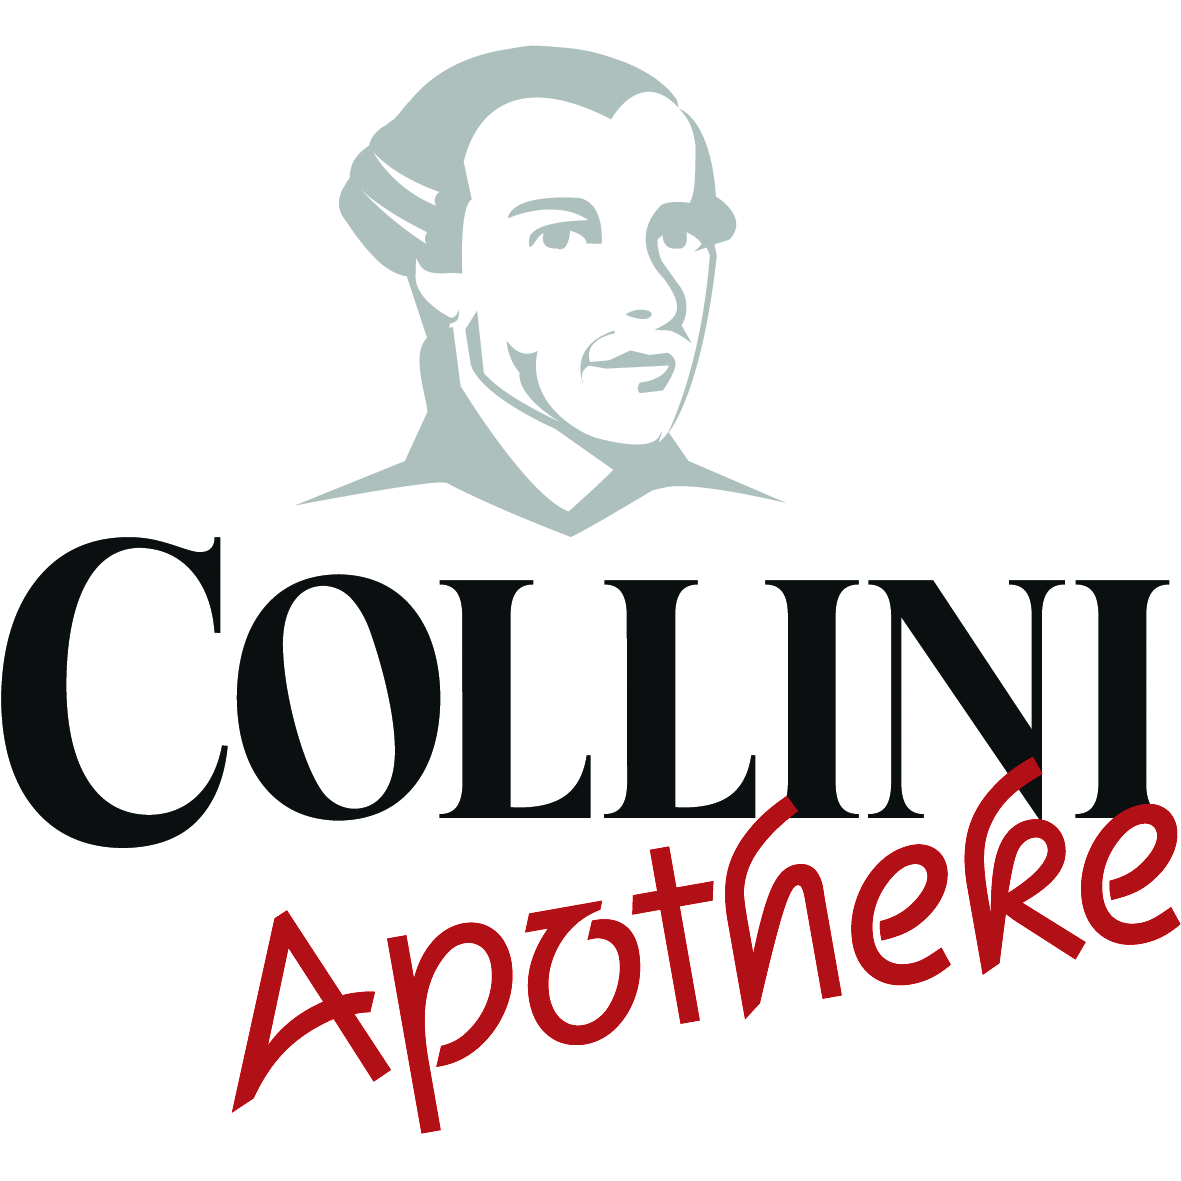 Logo der Collini-Apotheke